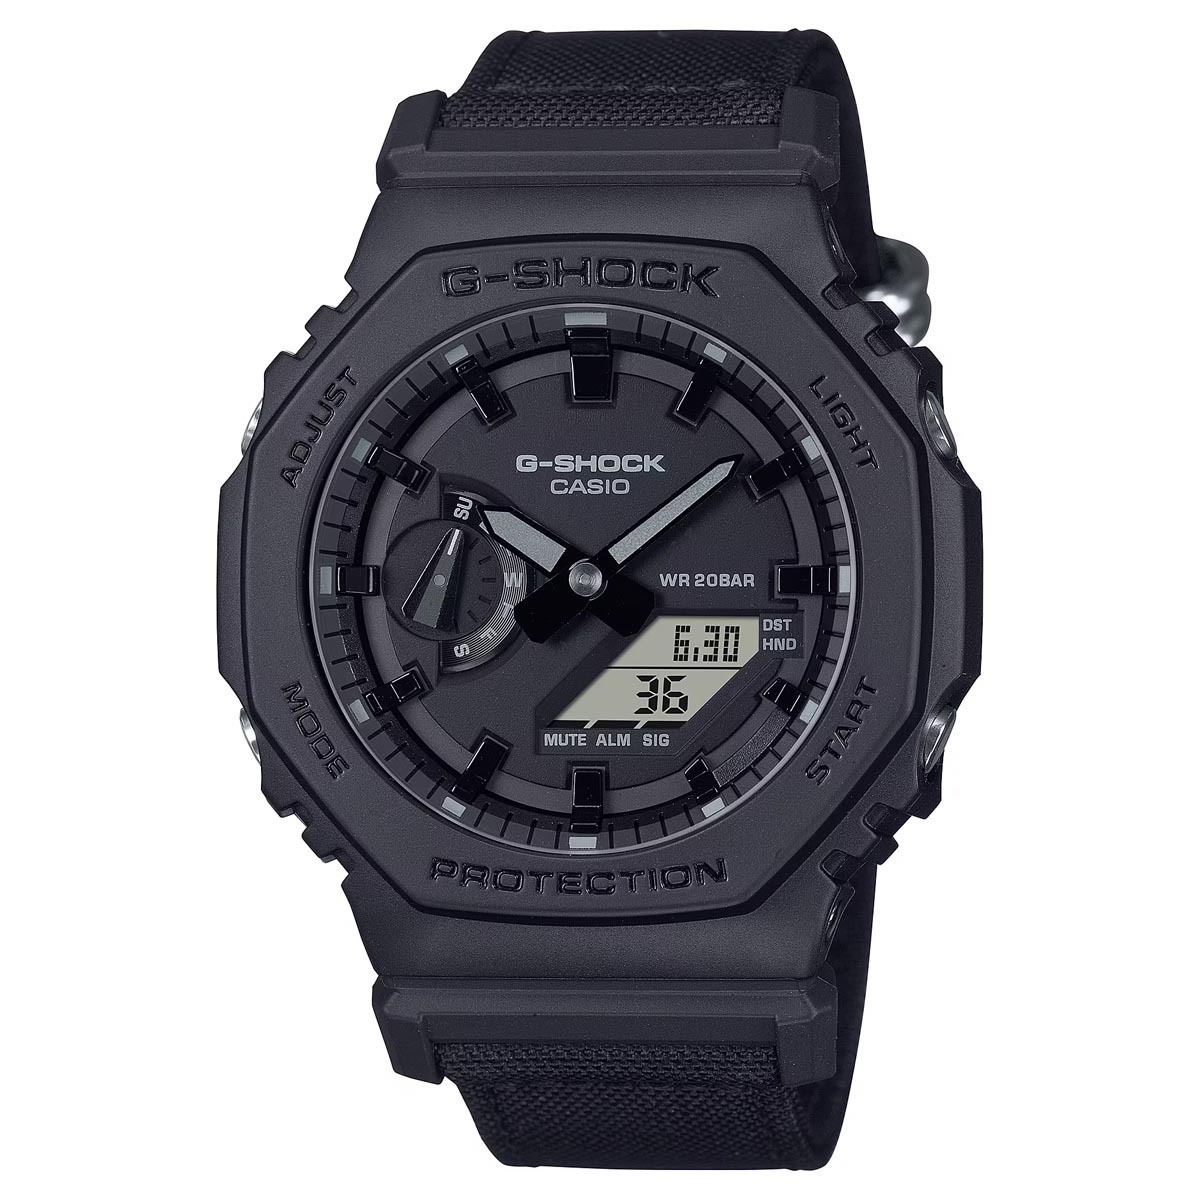 G-Shock 2100 Series Men's Watch with Black Cordura Eco Band (quartz movement)